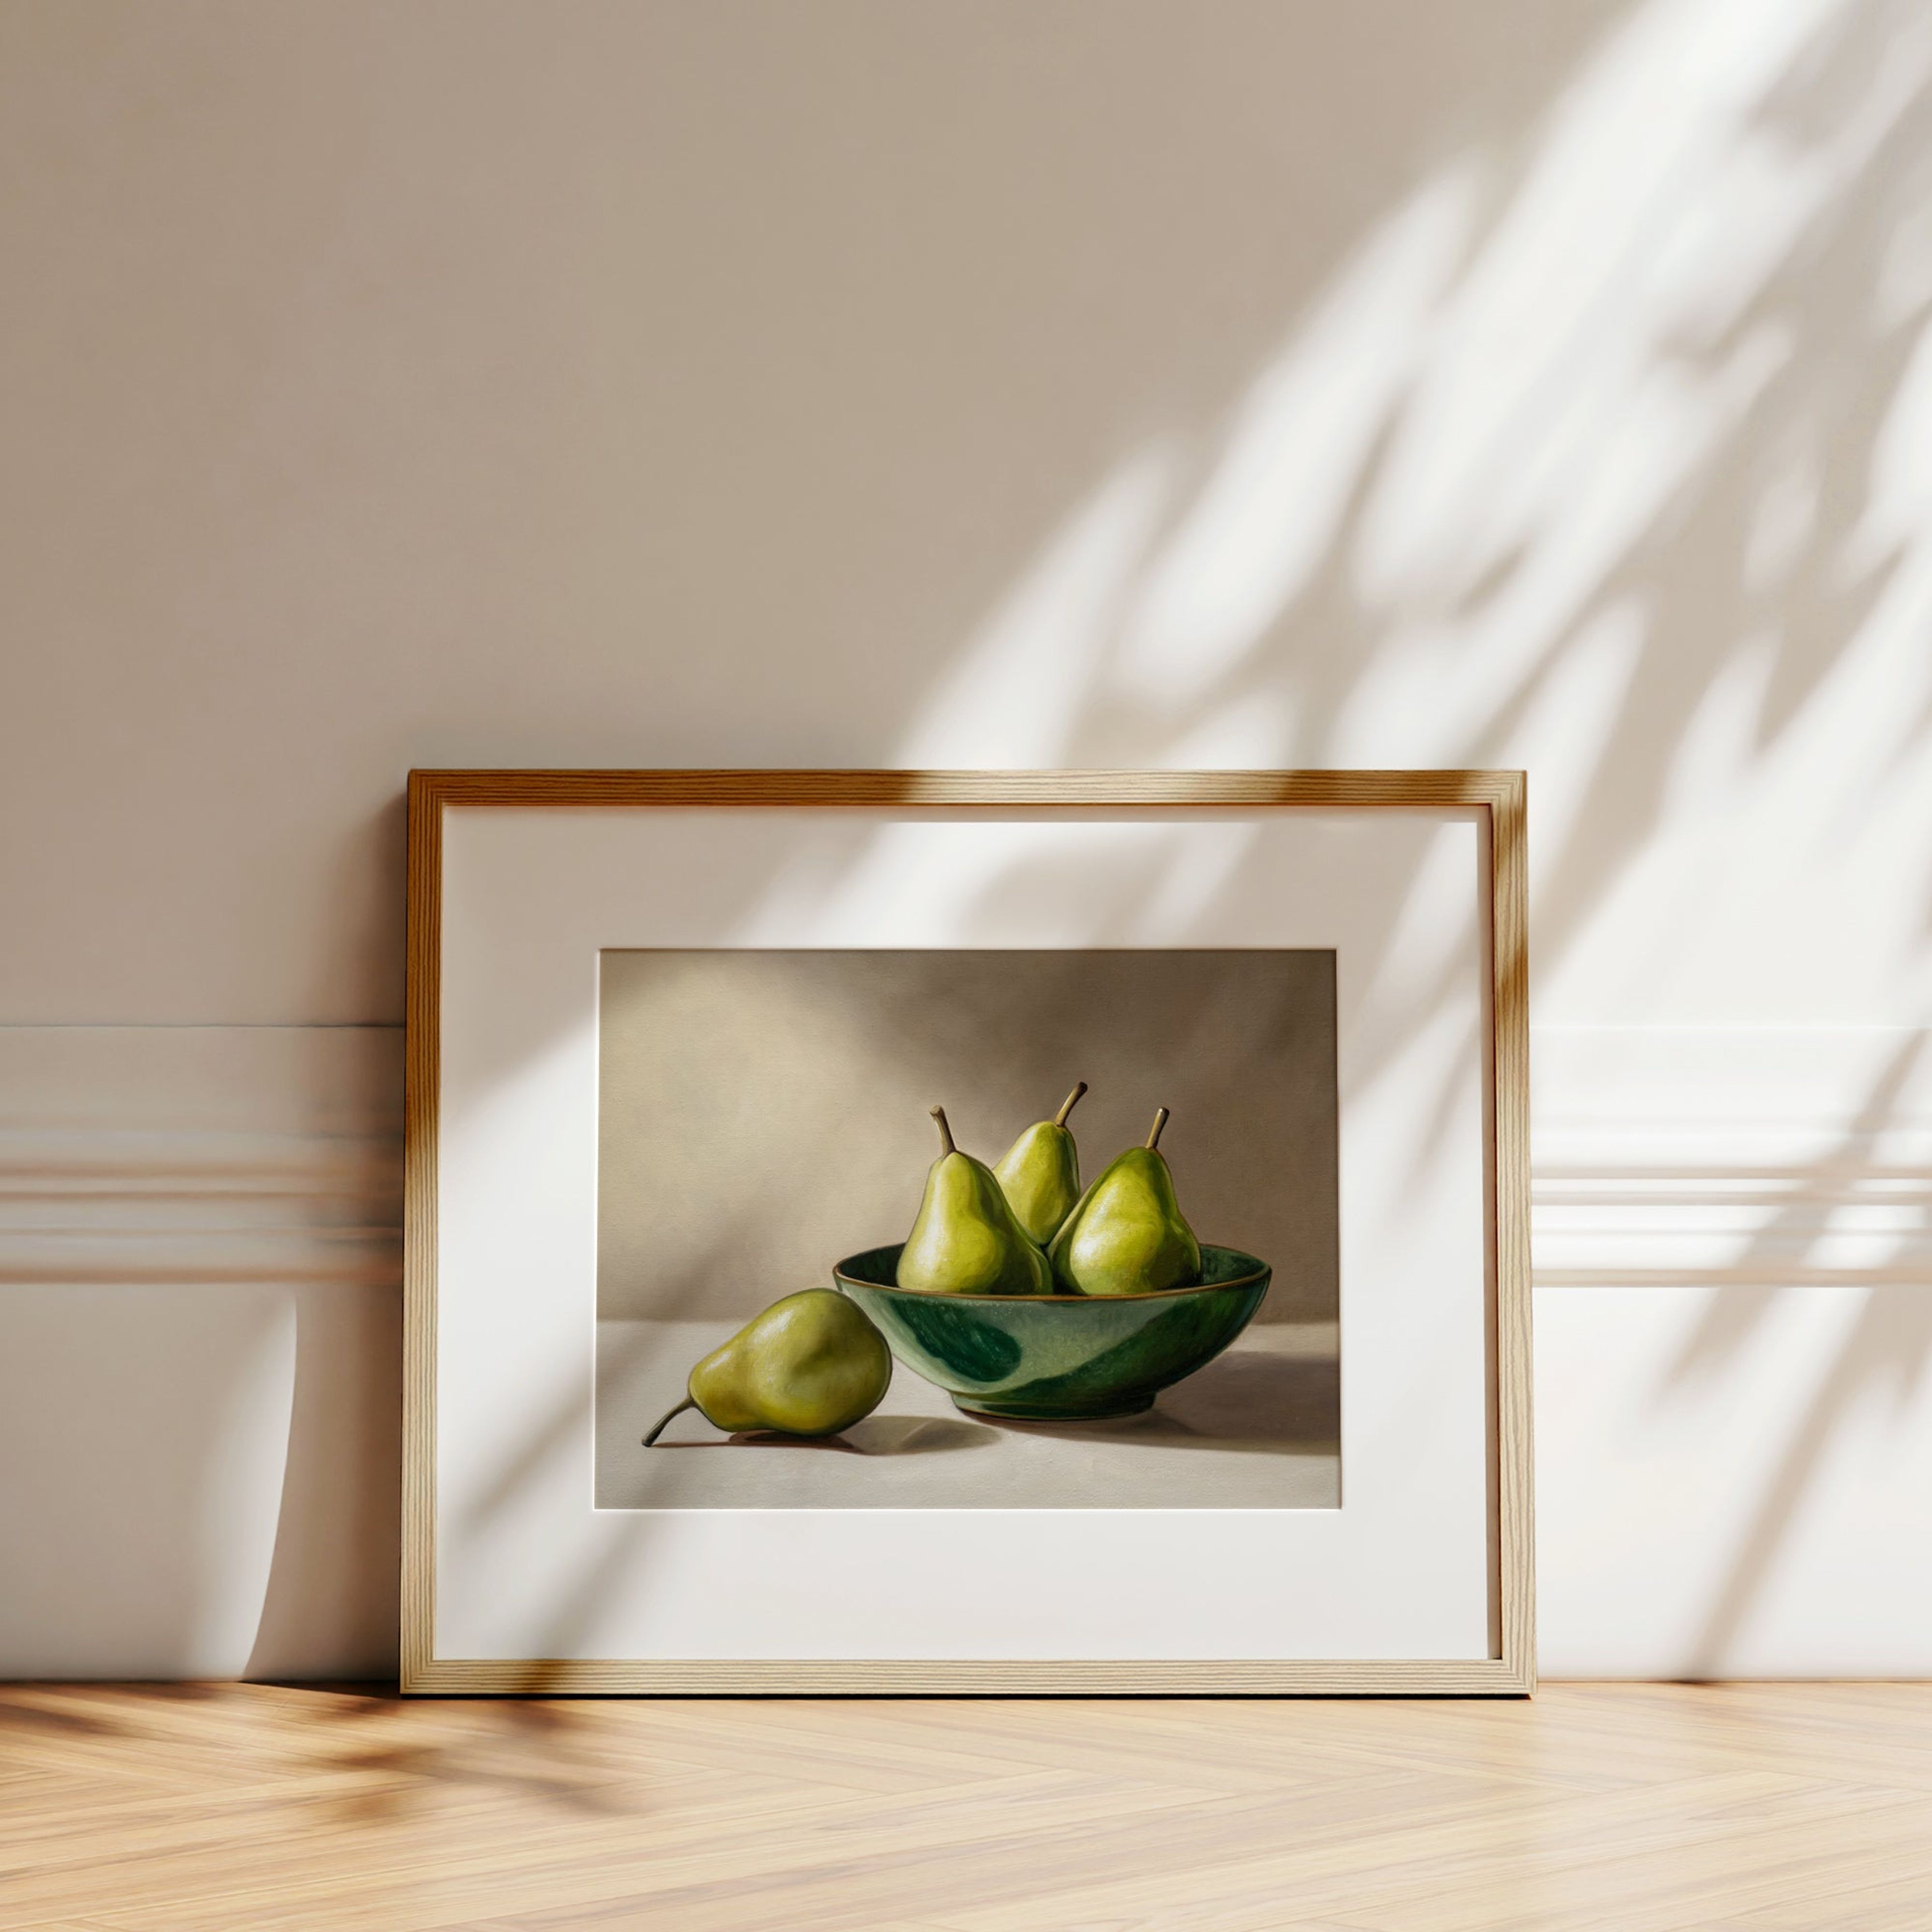 Pears & Green Bowl | Fine Art Print